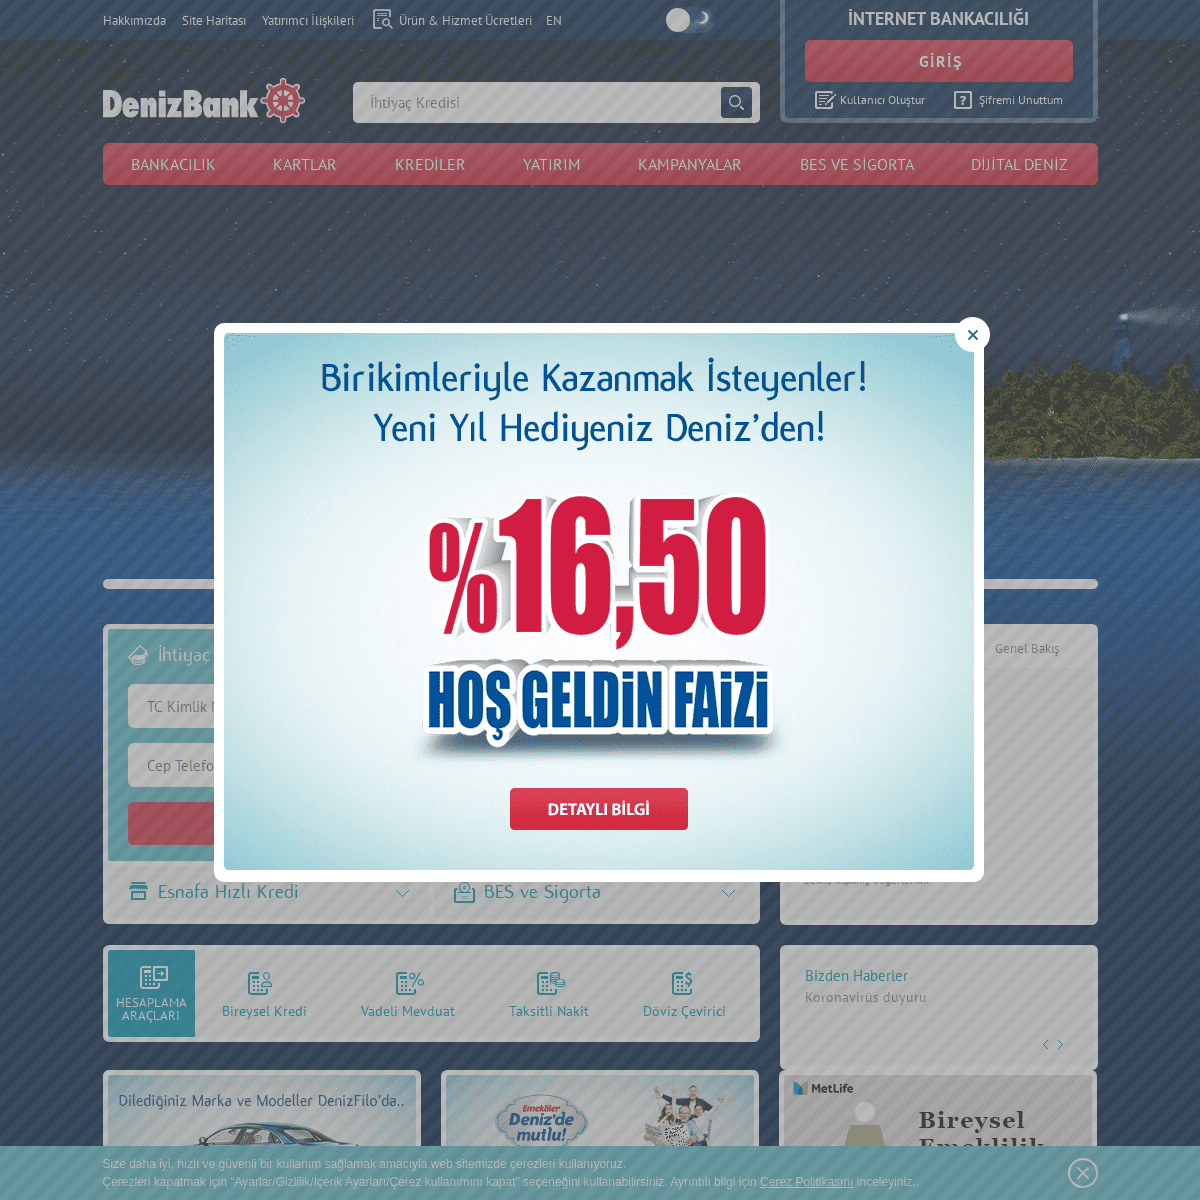 A complete backup of denizbank.com